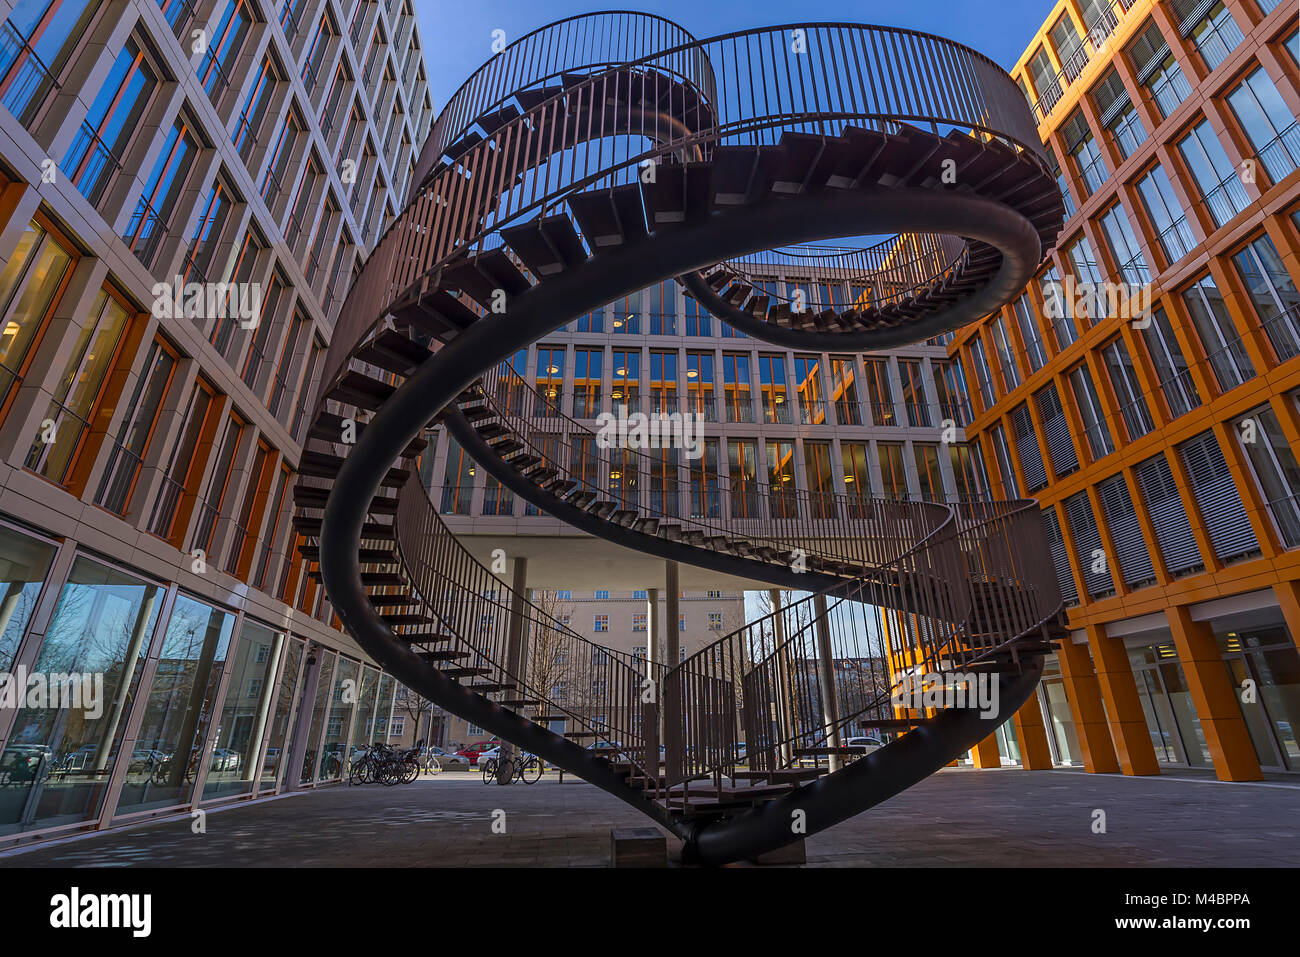 Louis Vuitton's Spiralling Double-Helix Glass Elevator — Elevator Scene